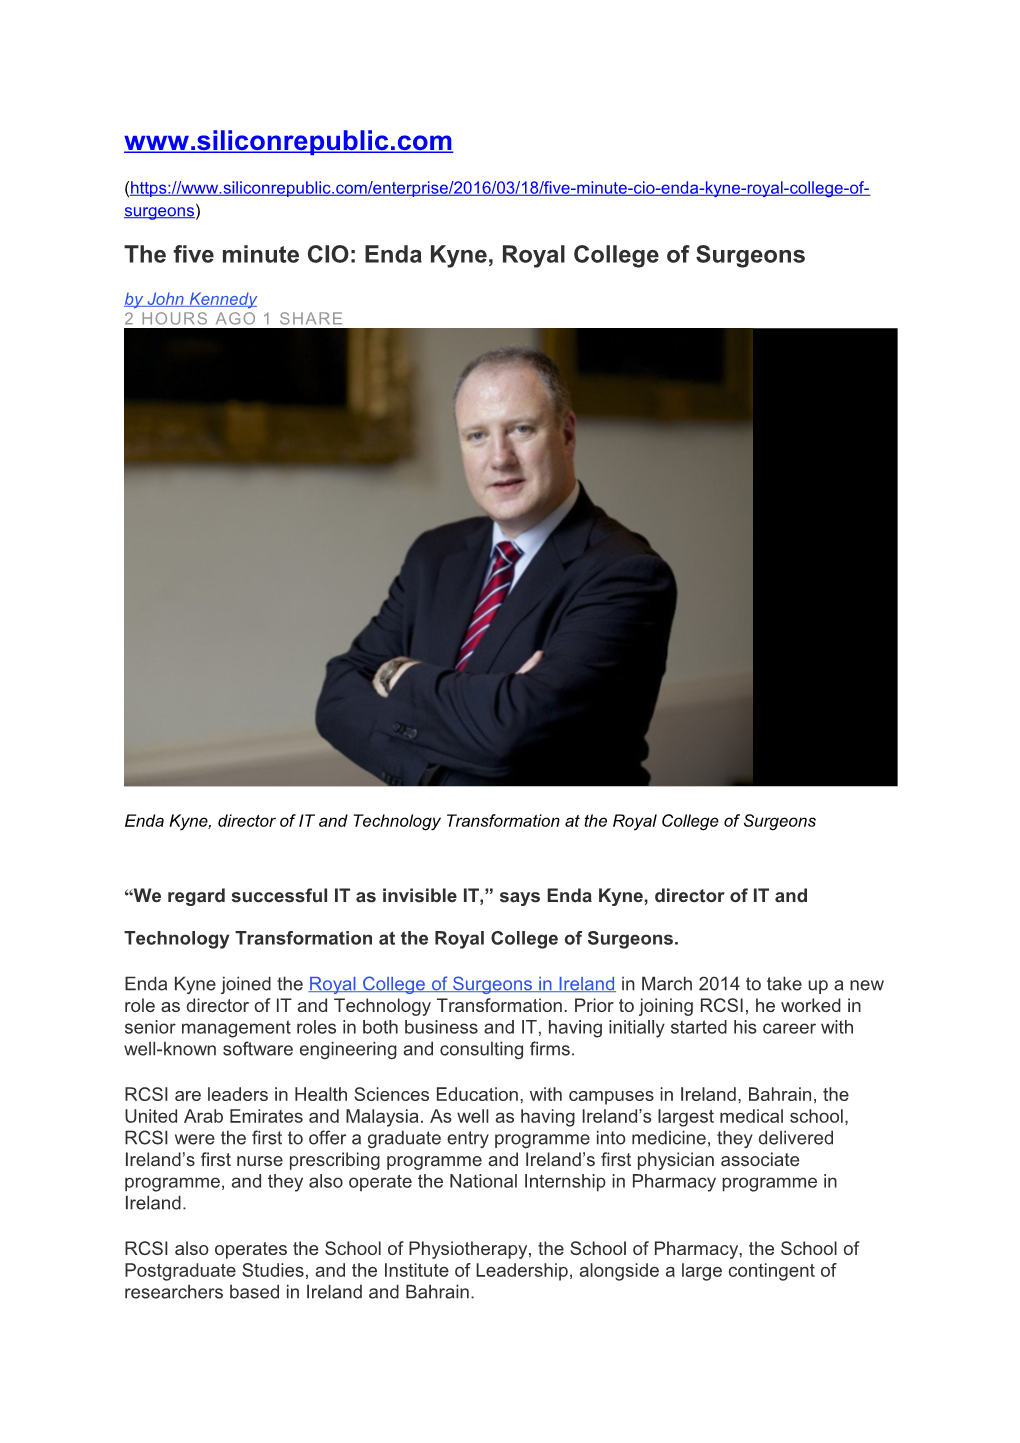 The Five Minute CIO: Enda Kyne, Royal College of Surgeons